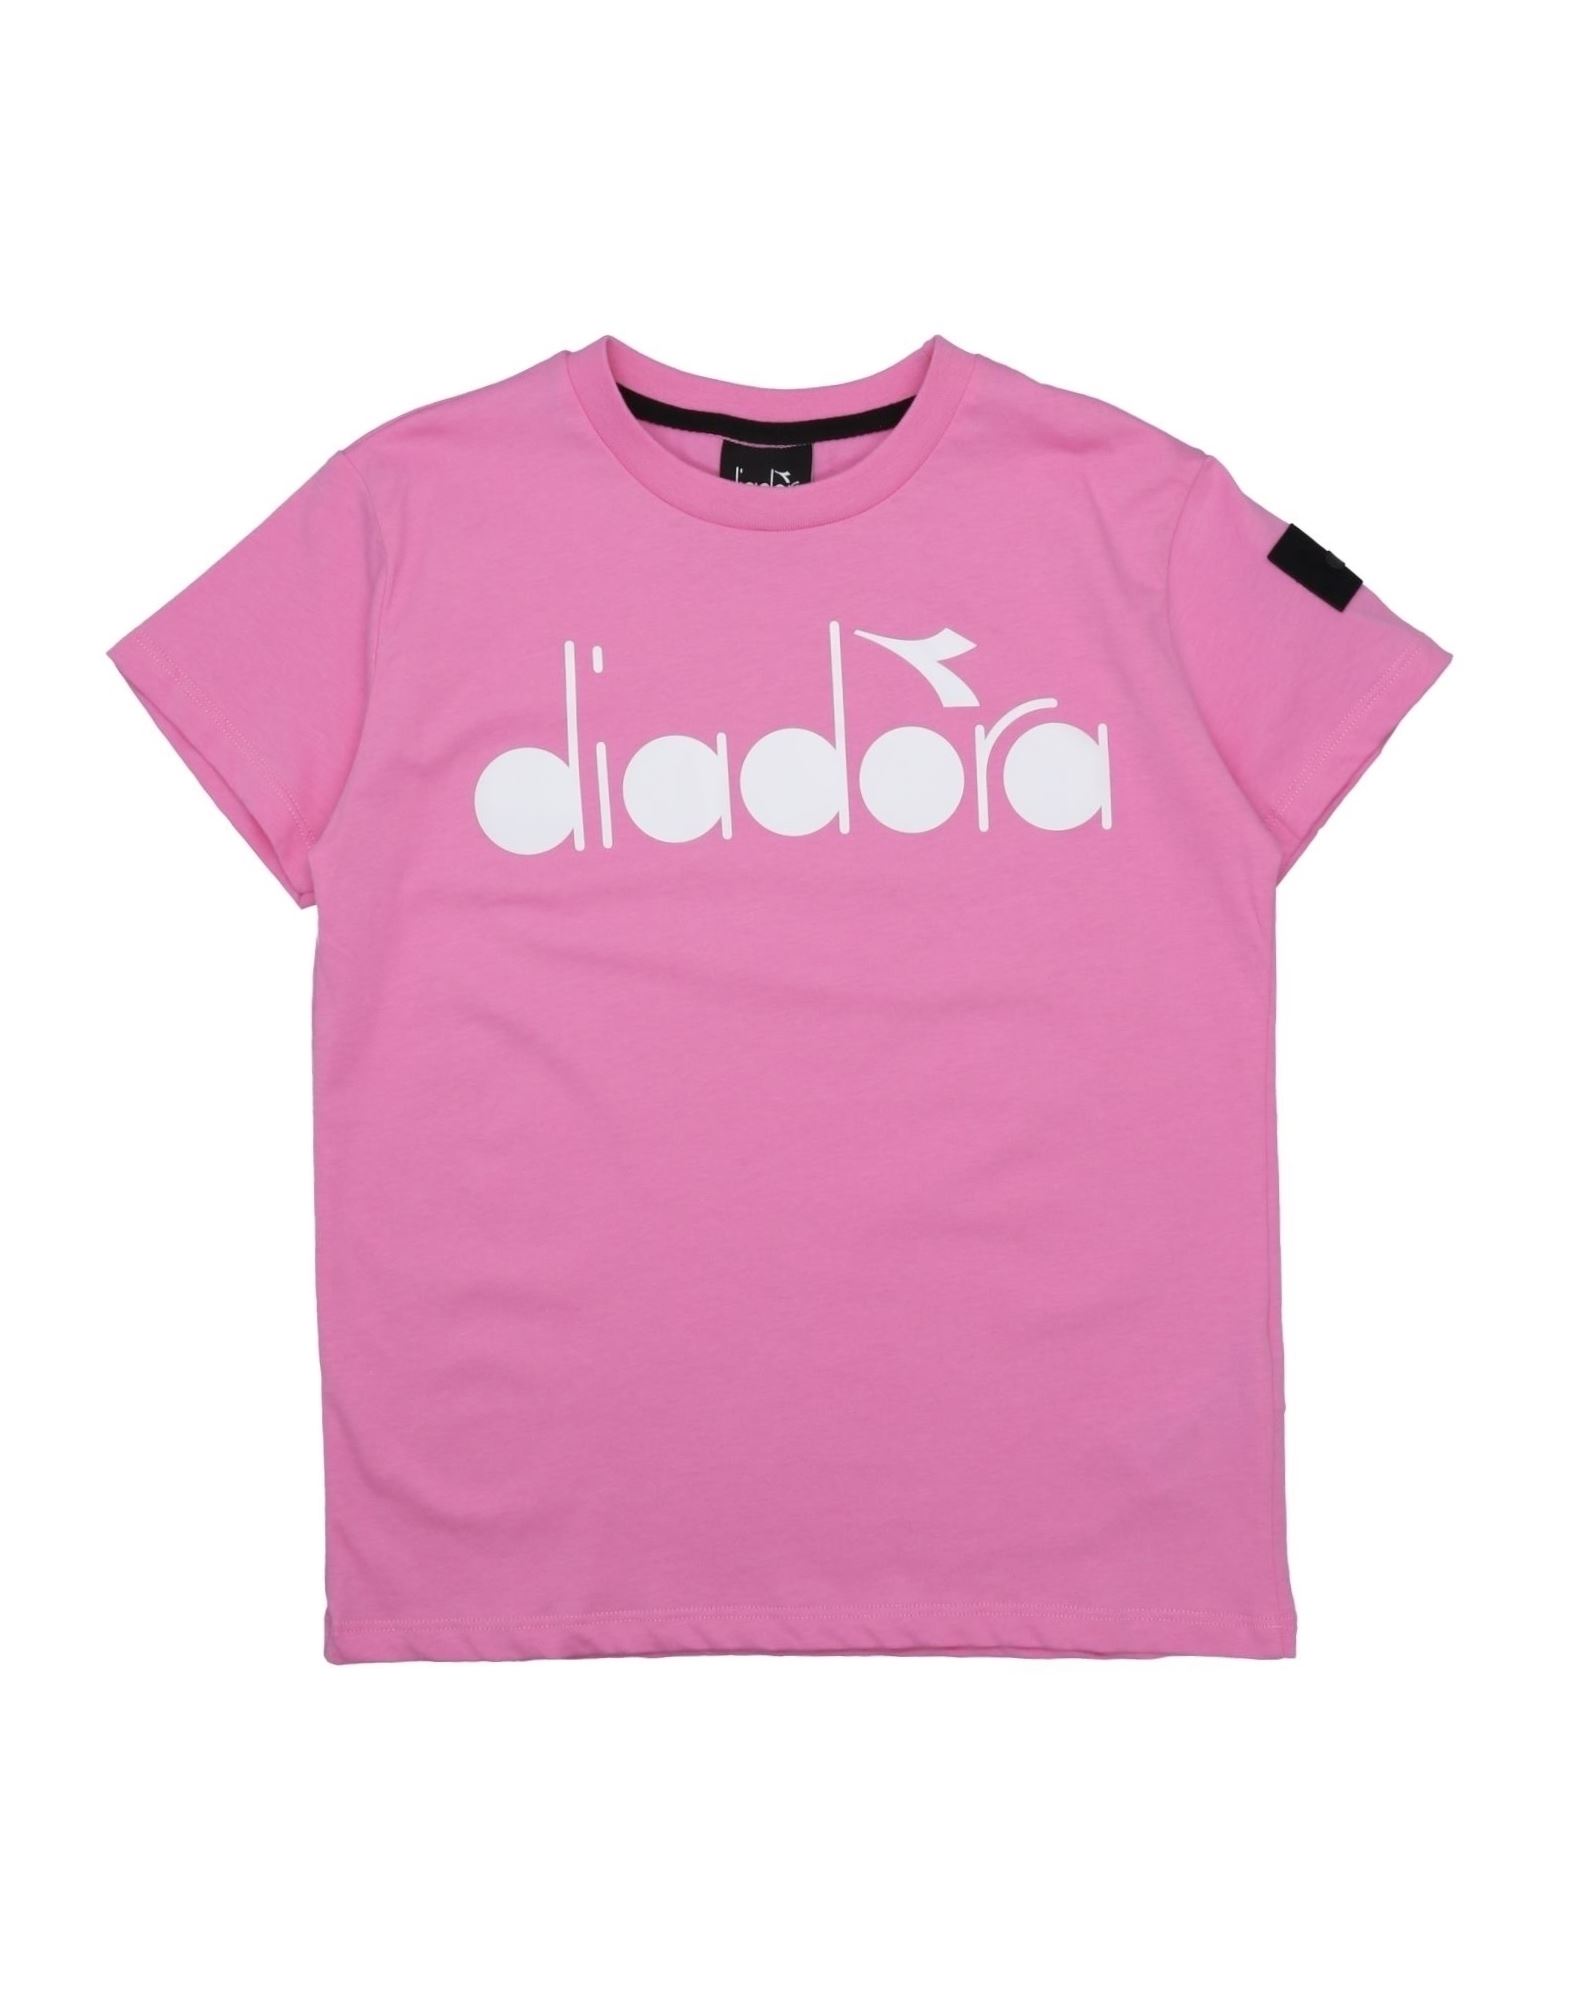 Diadora Kids'  Toddler Girl T-shirt Pink Size 6 Cotton